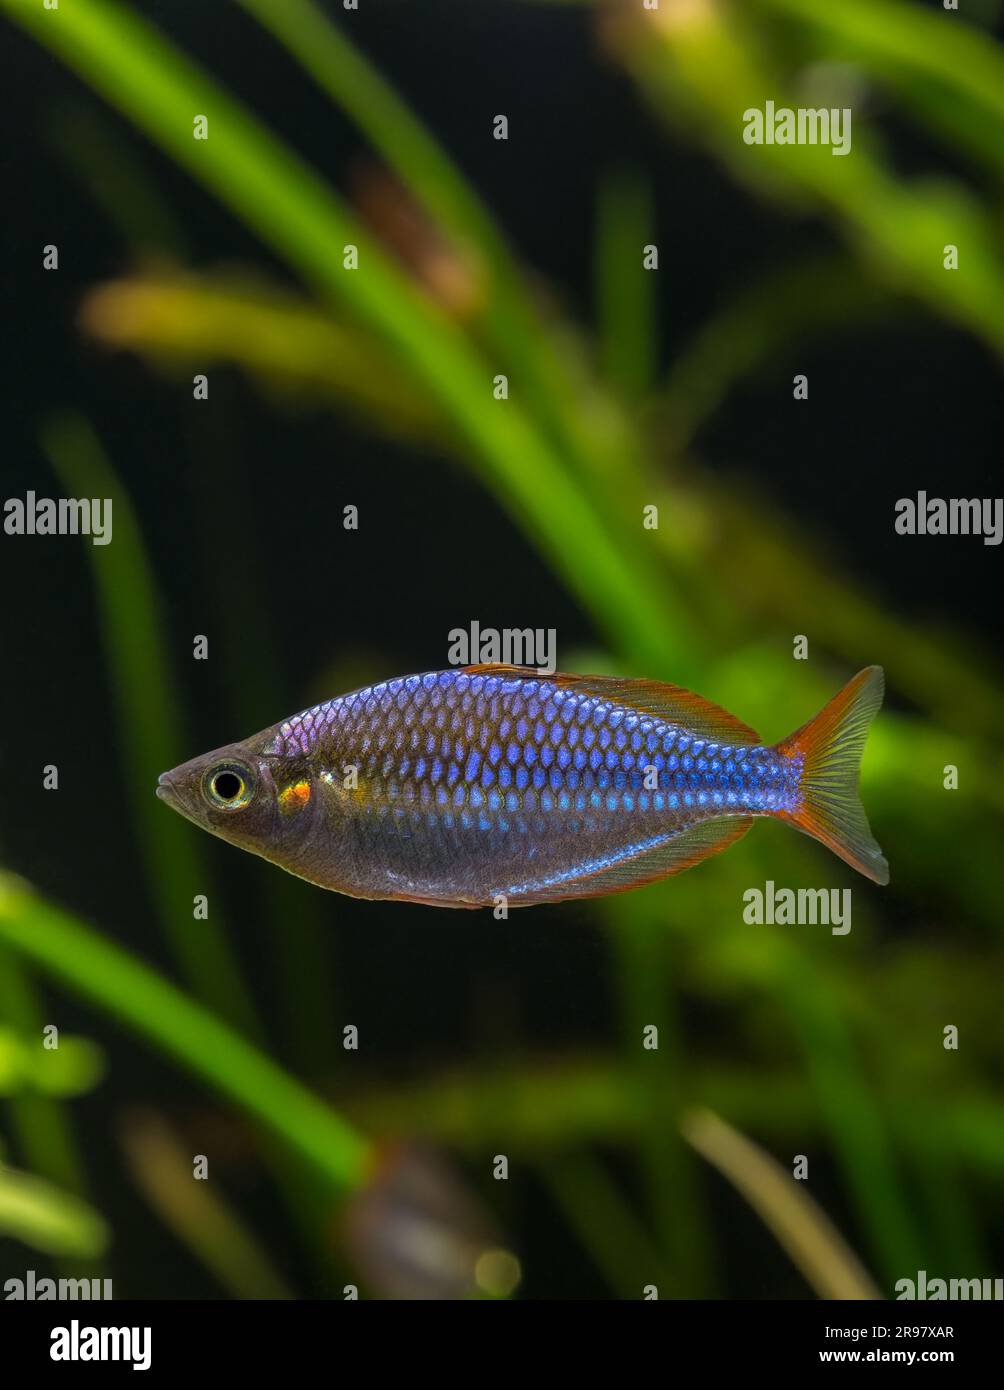 Rainbow fish in aquarium hi-res stock photography and images - Alamy